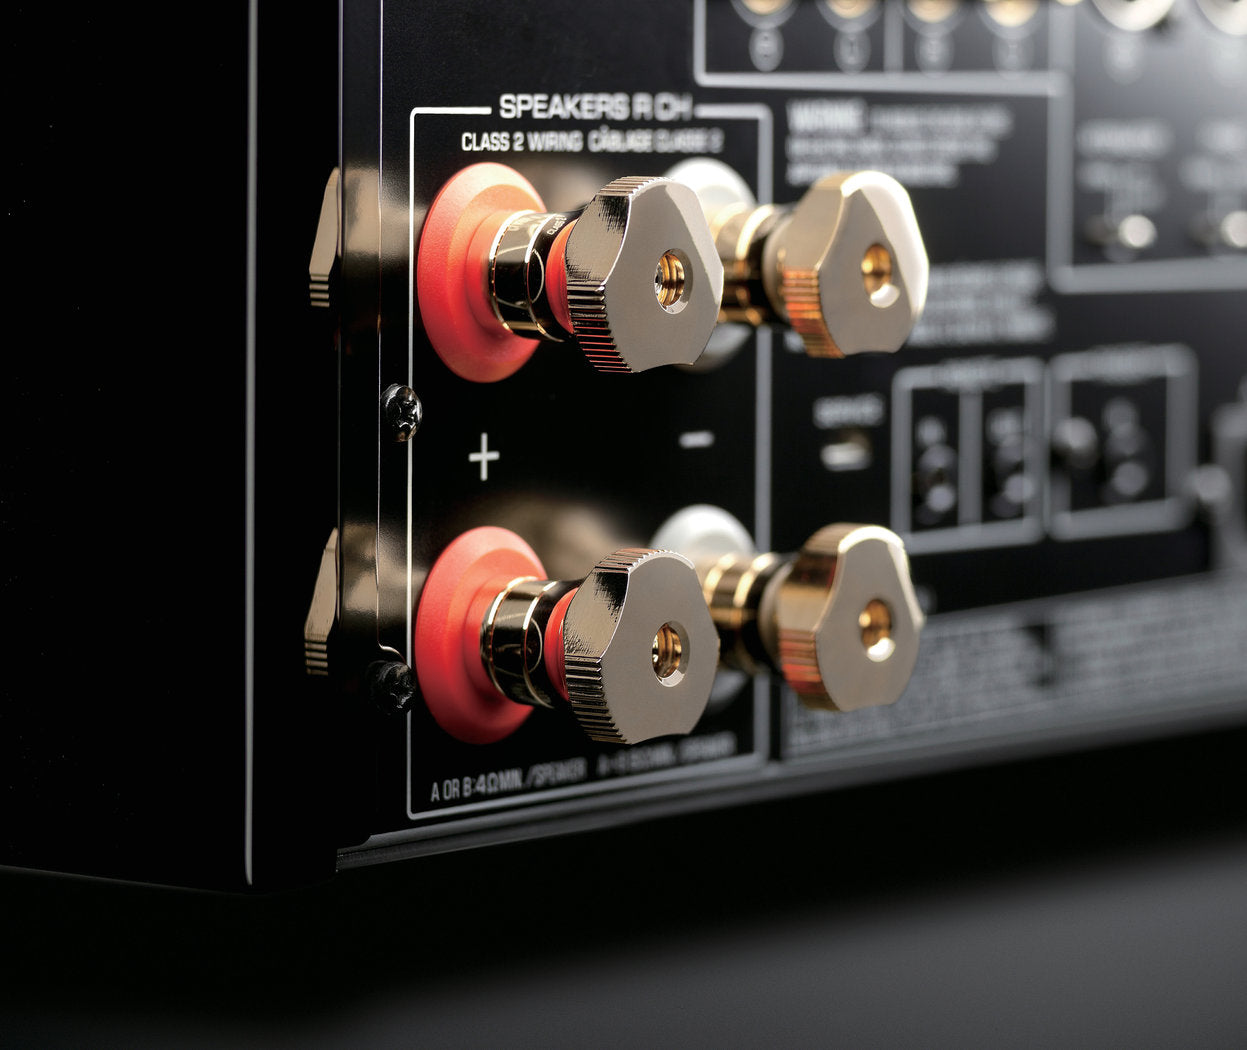 Yamaha A-S3200 stereo amplifier